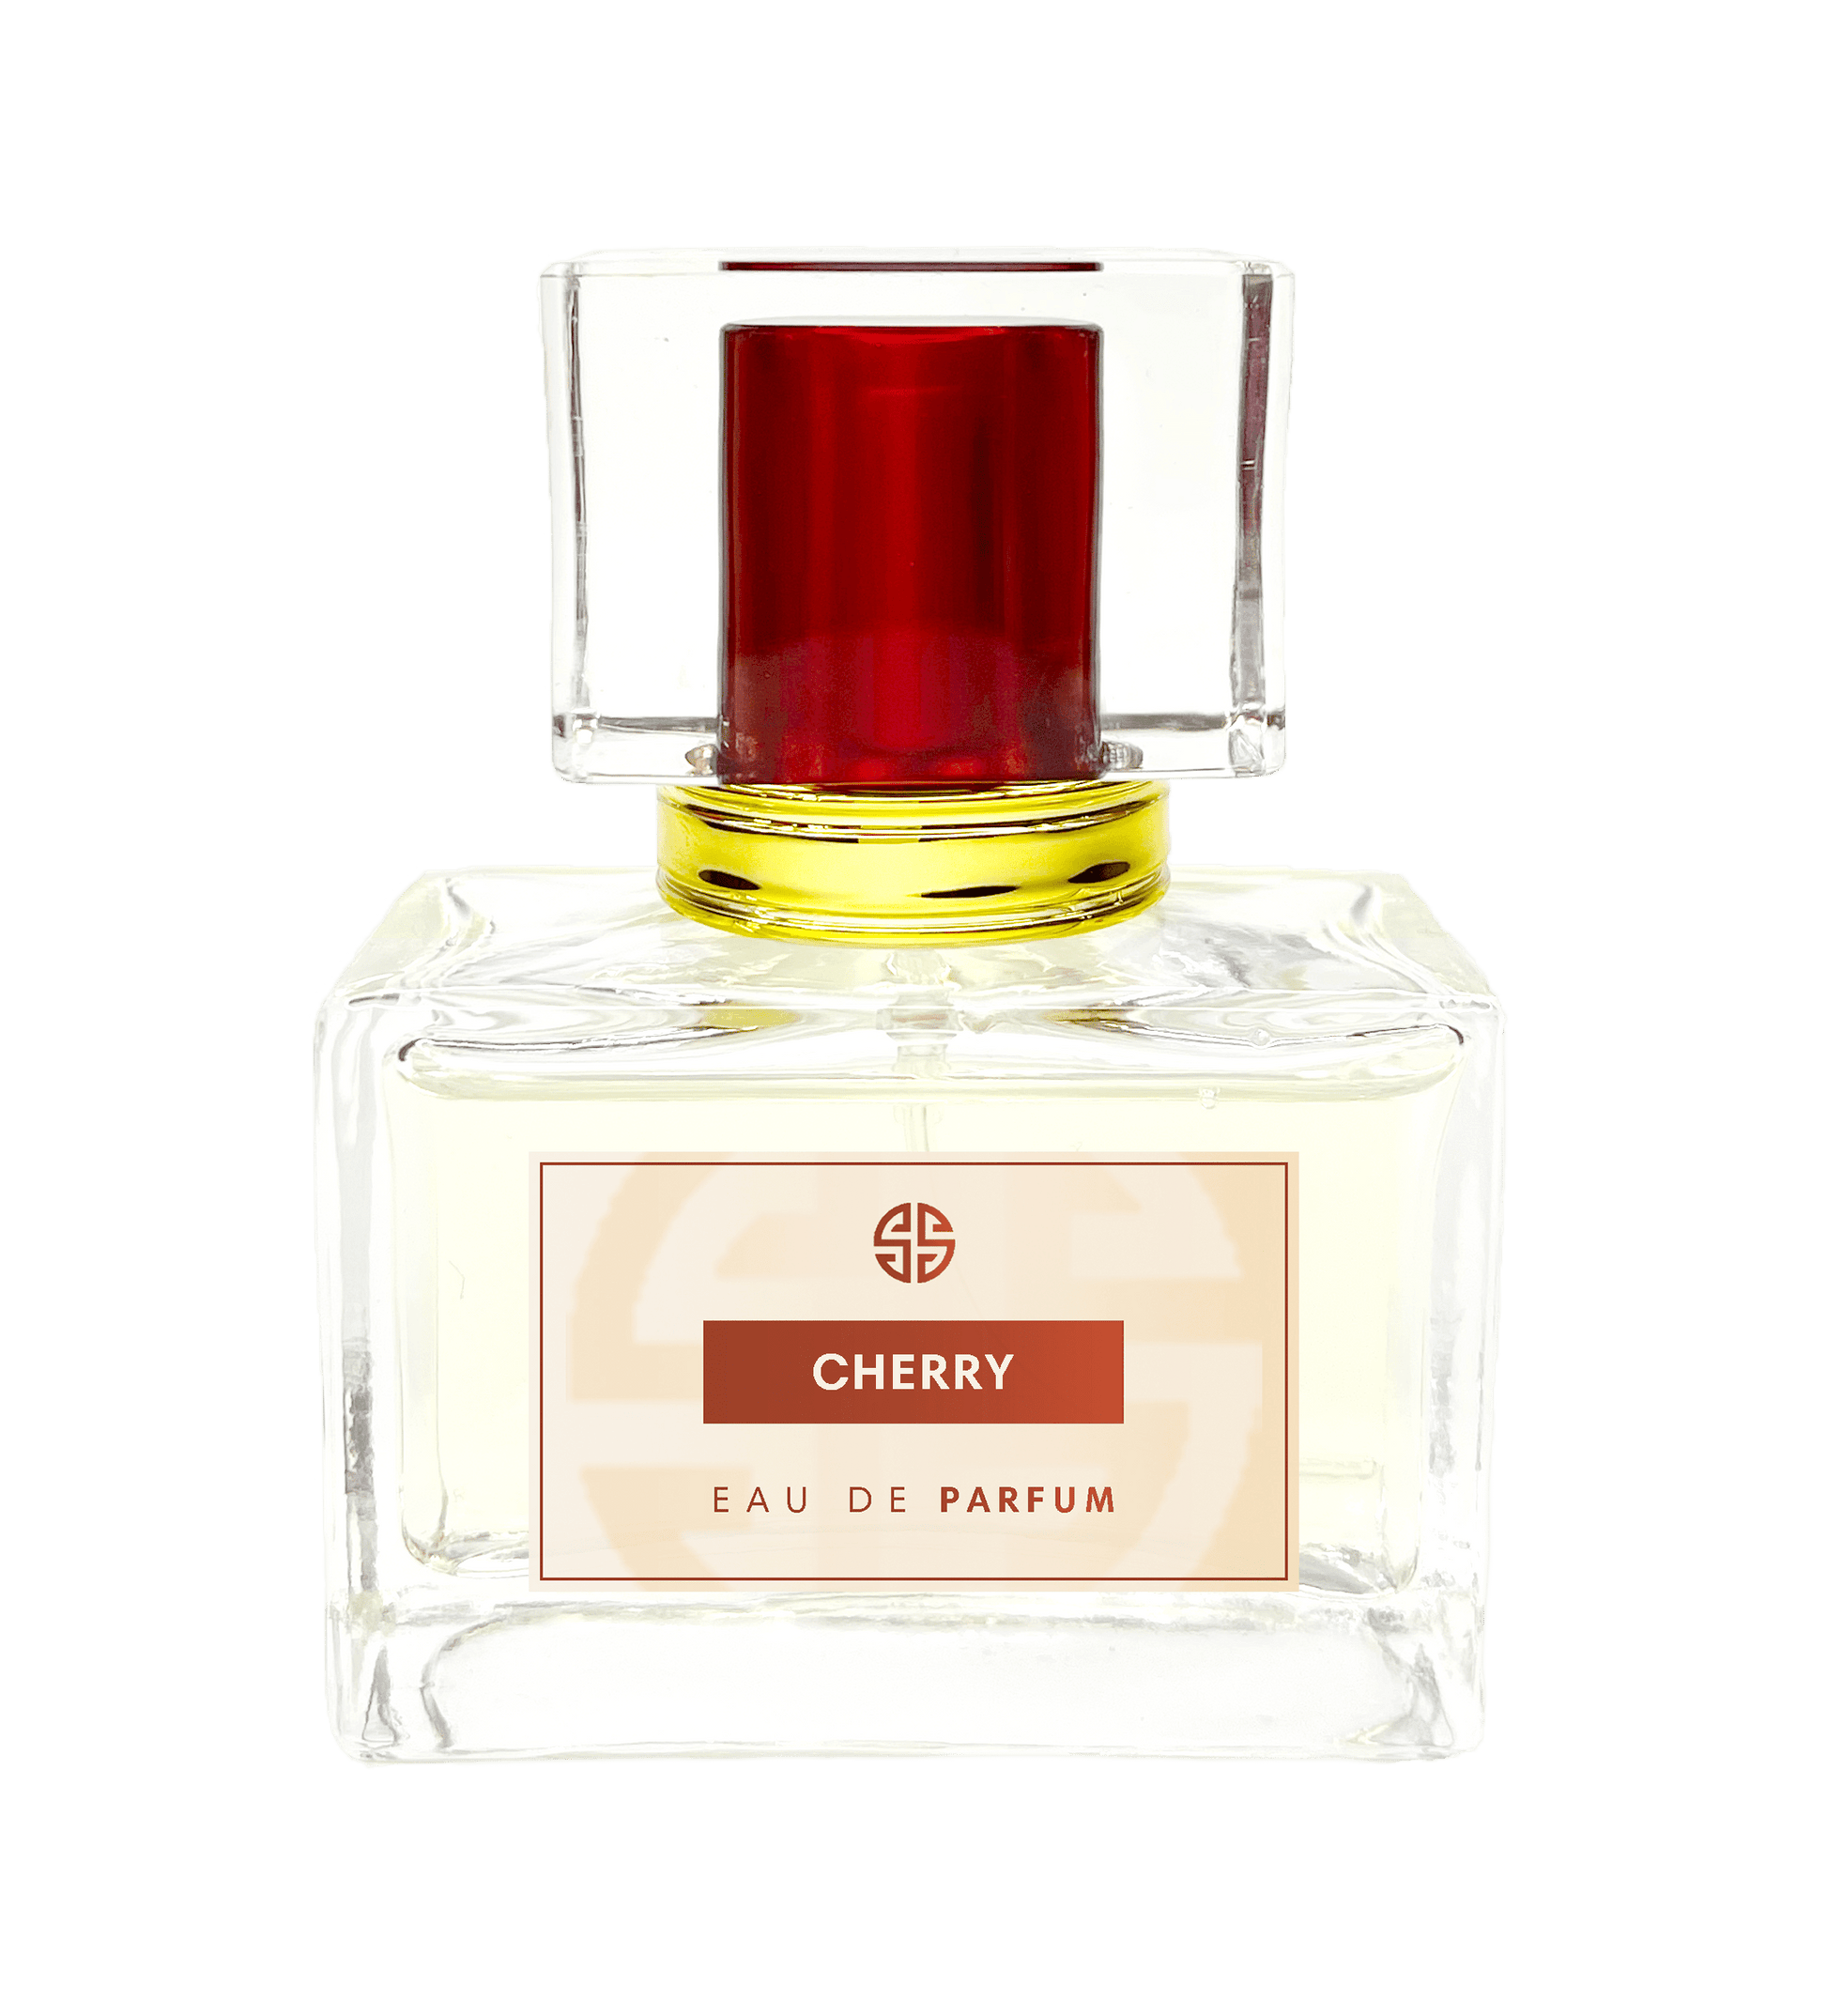 Lost Cherry parfum - Similar Scent CHERRY - undefined